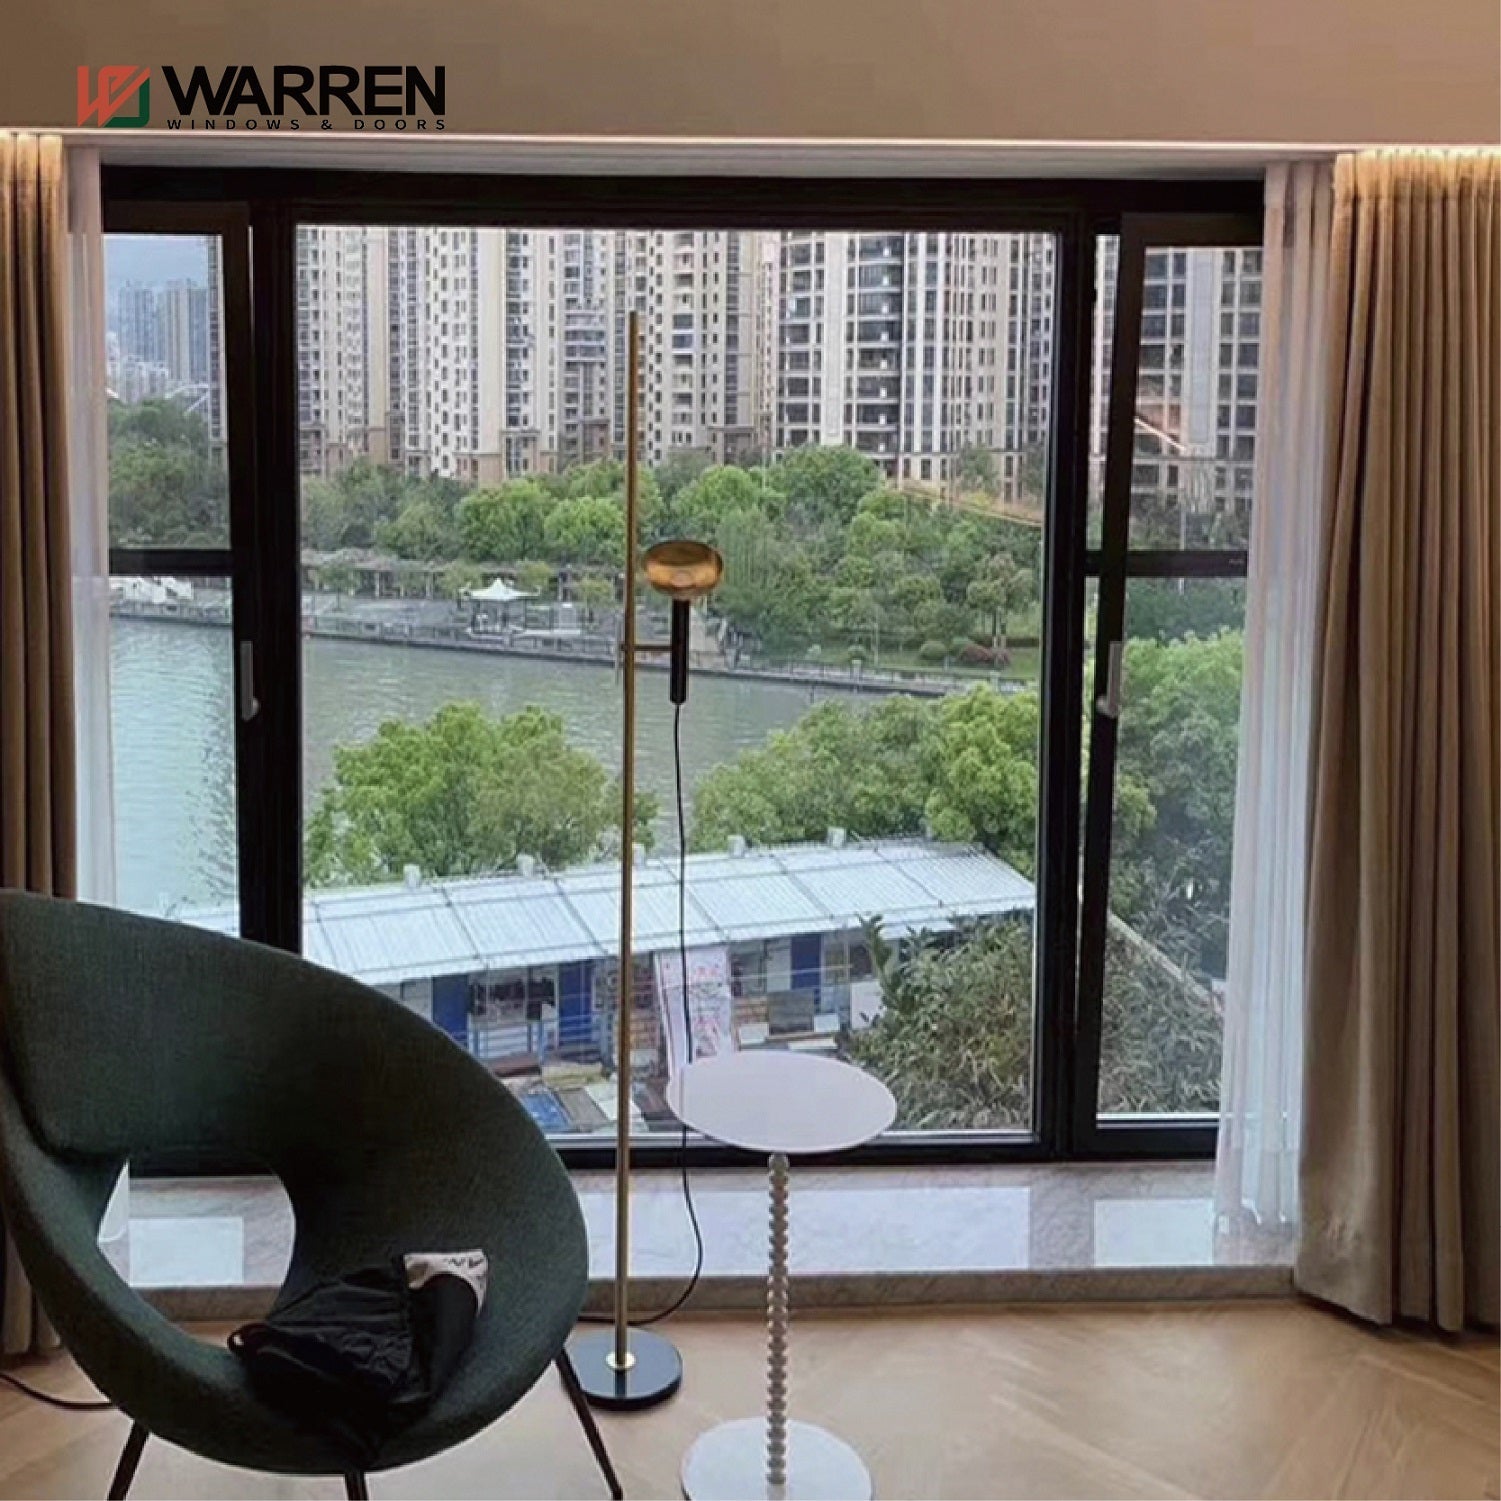 Warren 36x24 Window Modern Black Aluminum Tilt And Turn Casement Window With Grill Design And Mosquito Net